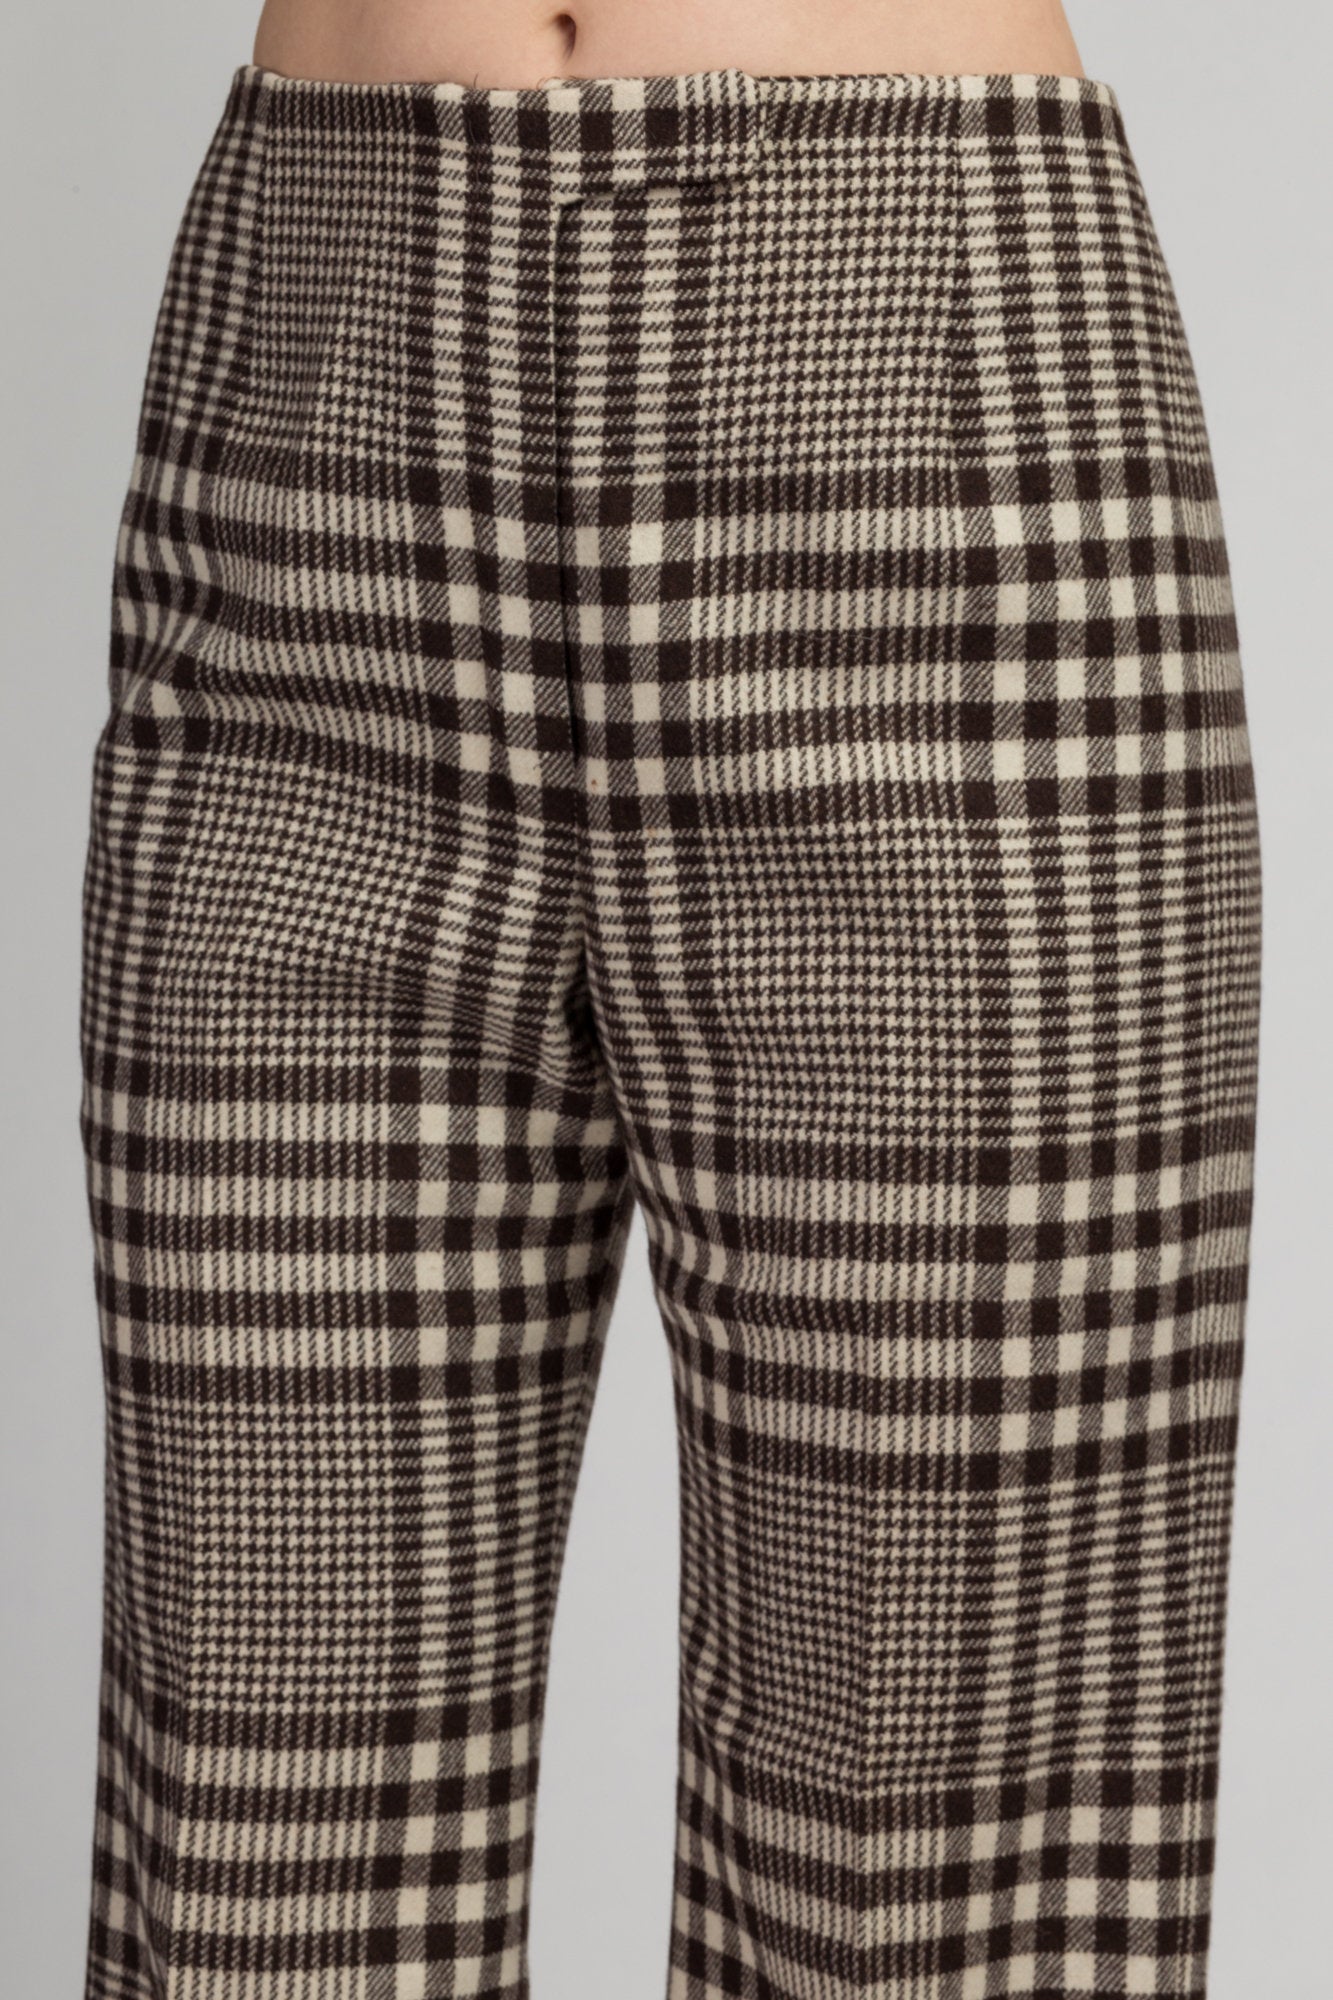 70s Plaid High Waisted Pants - Men's Small, Women's Medium, 29